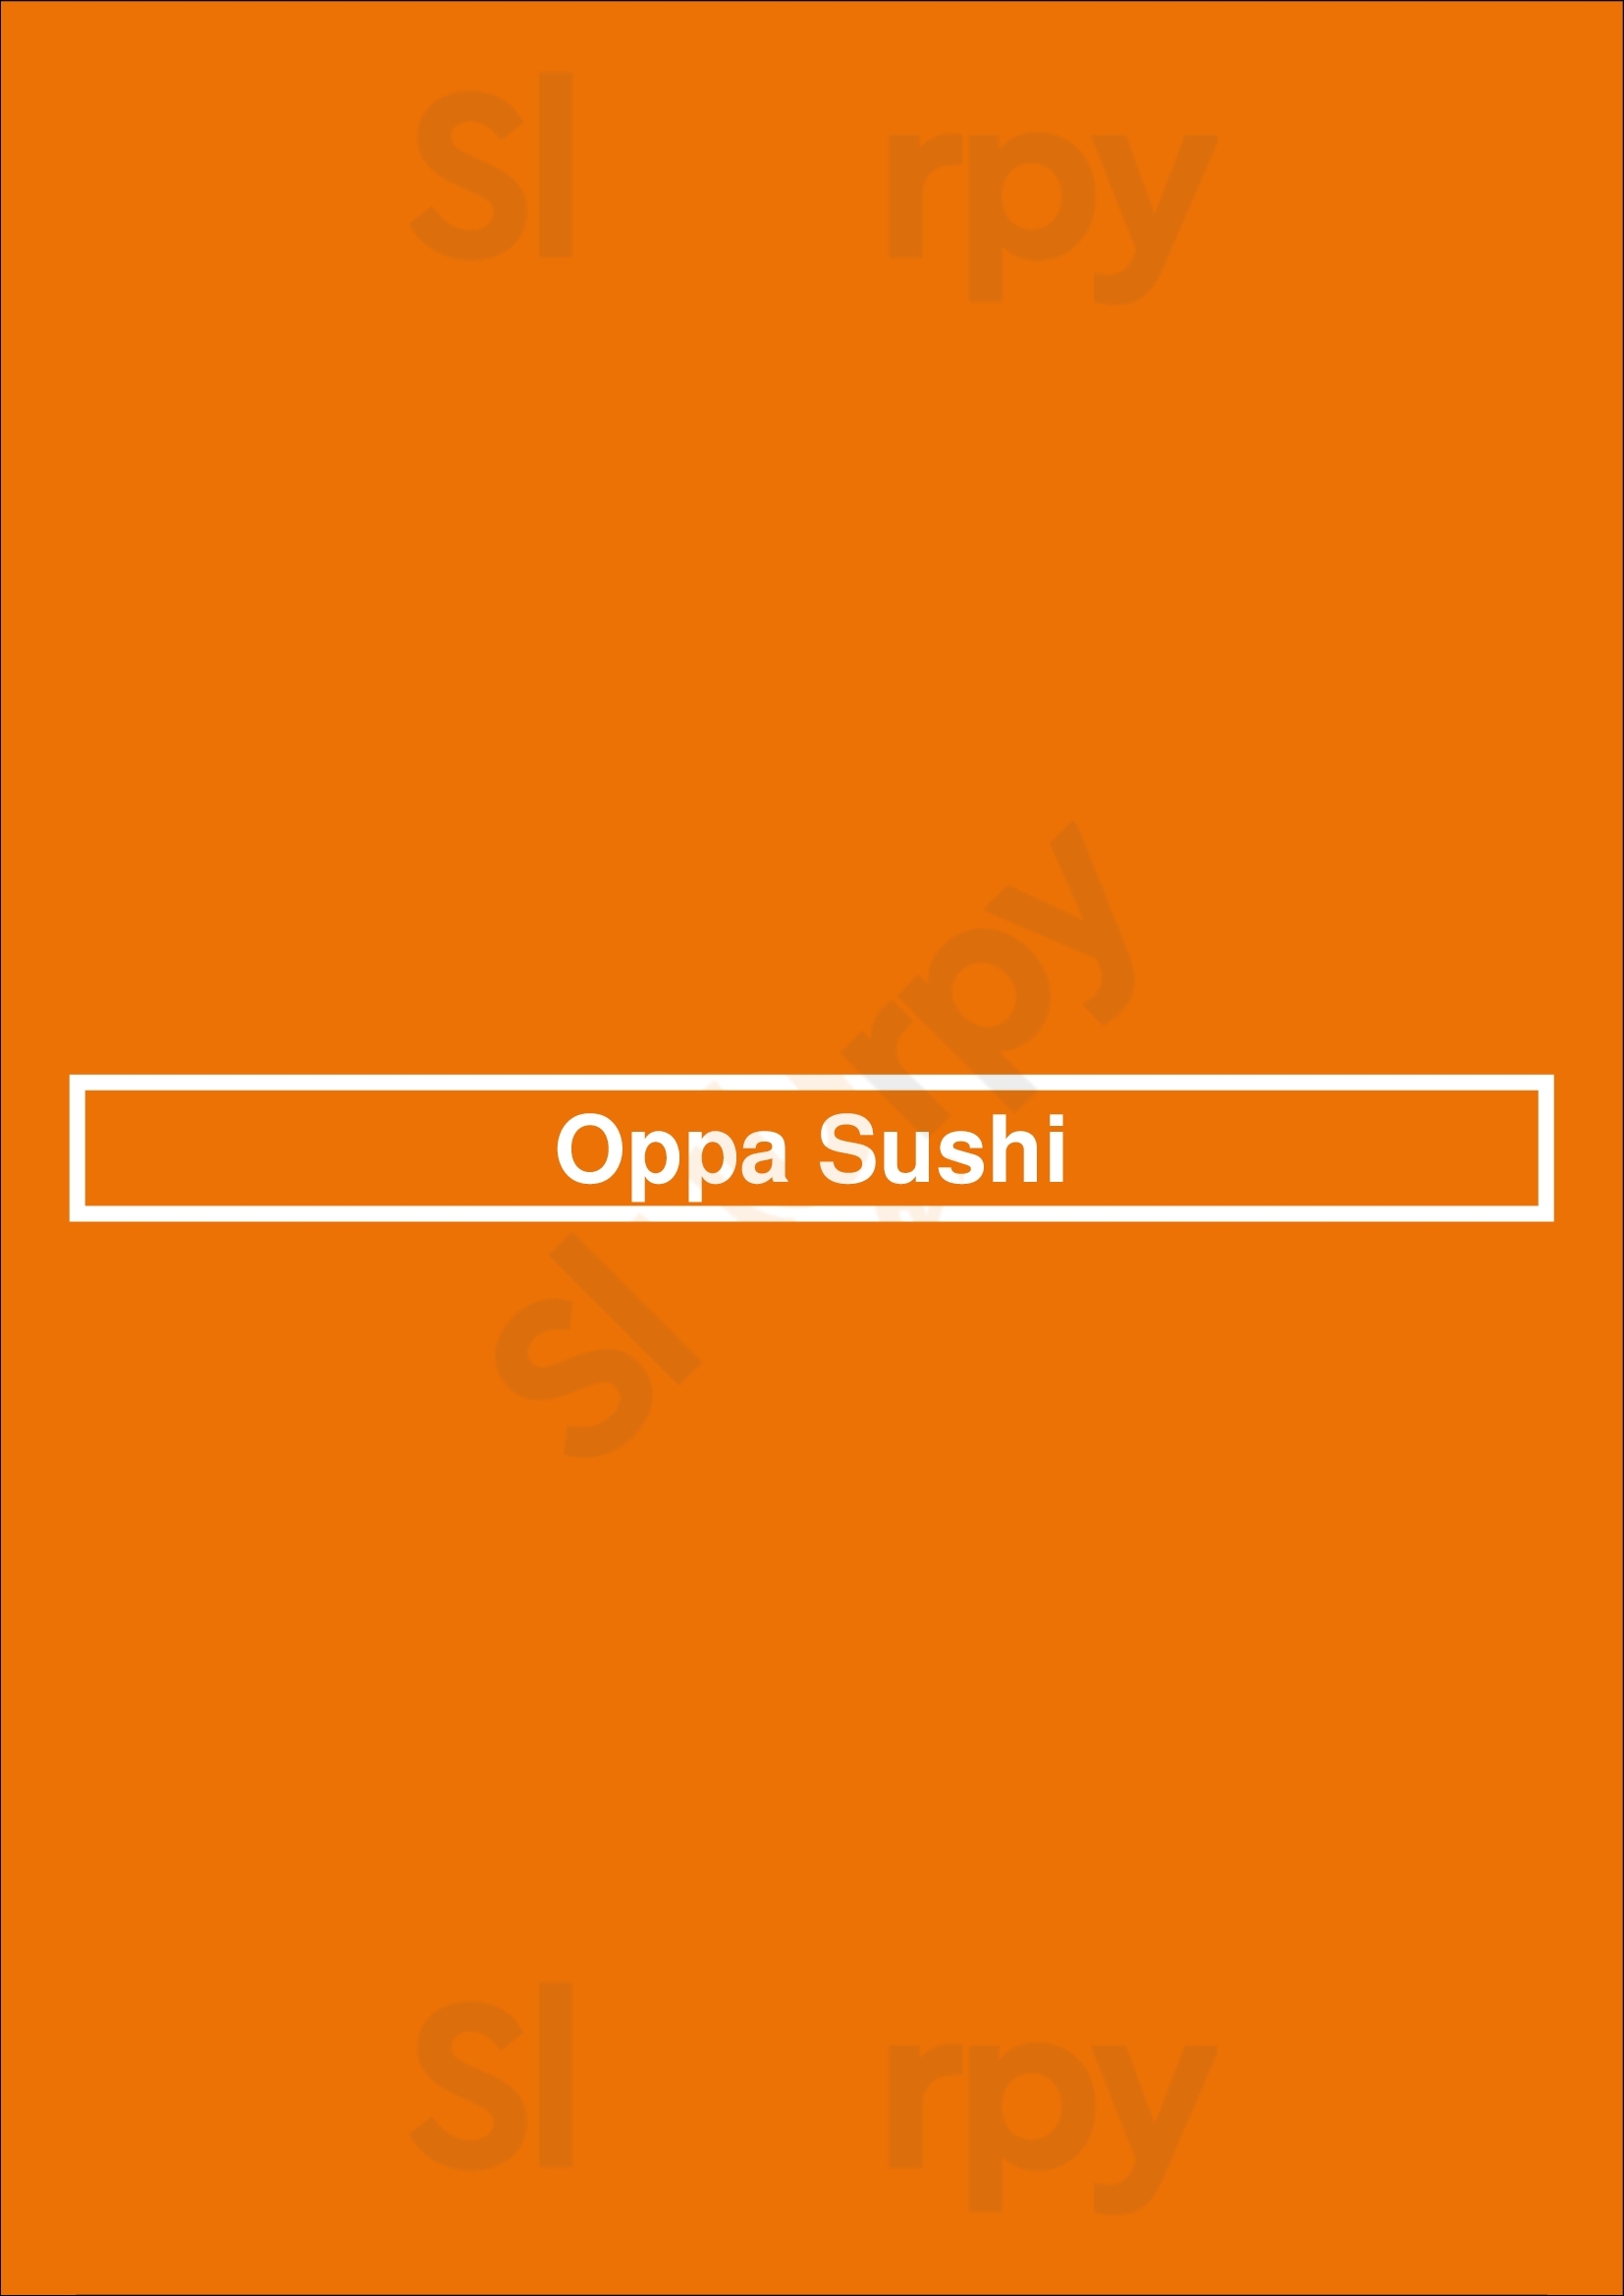 Oppa Sushi Boston Menu - 1